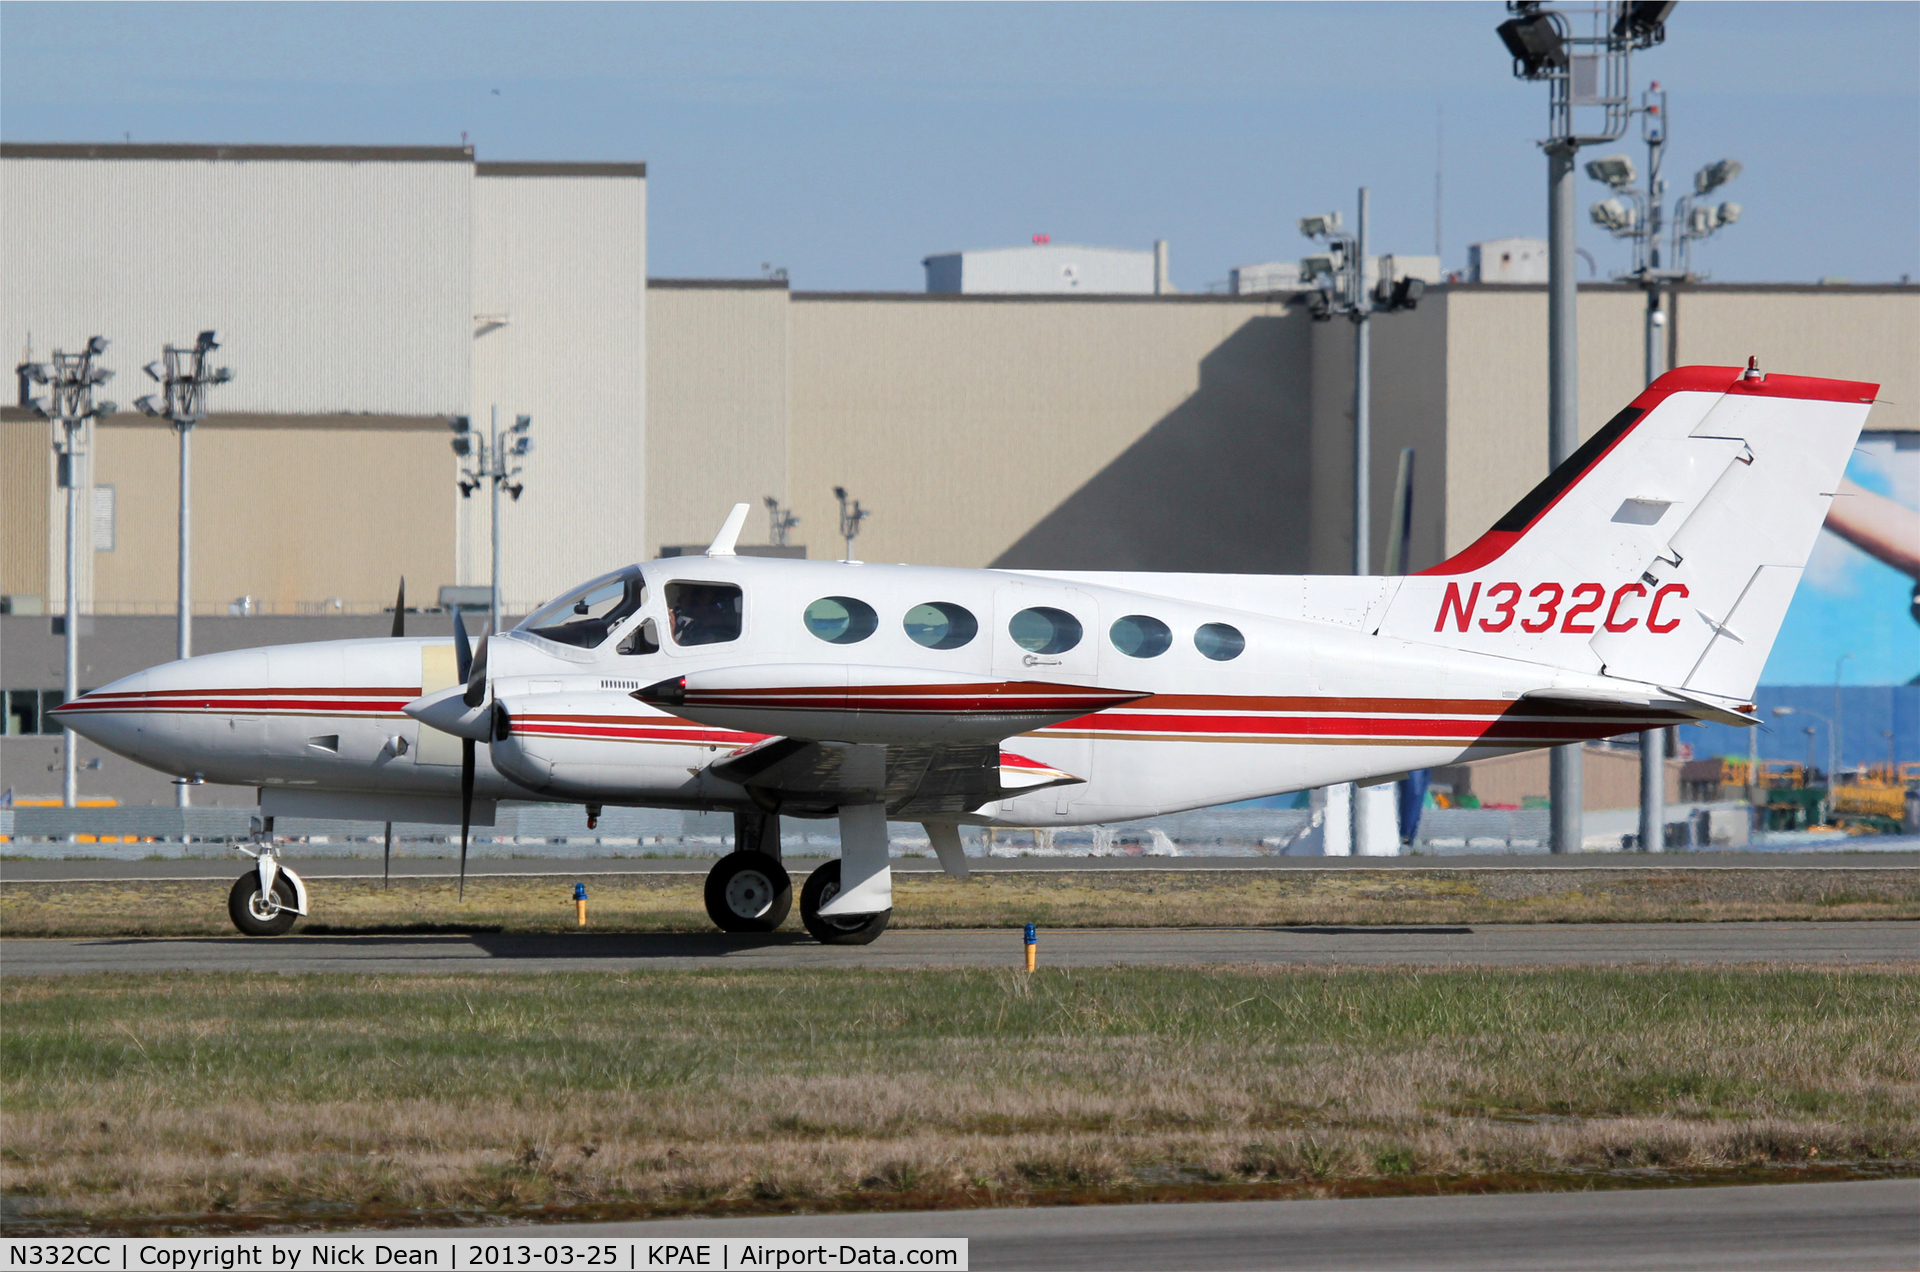 N332CC, 1974 Cessna 421B Golden Eagle C/N 421B0578, KPAE/PAE Instructional airframe at Everett Community College.